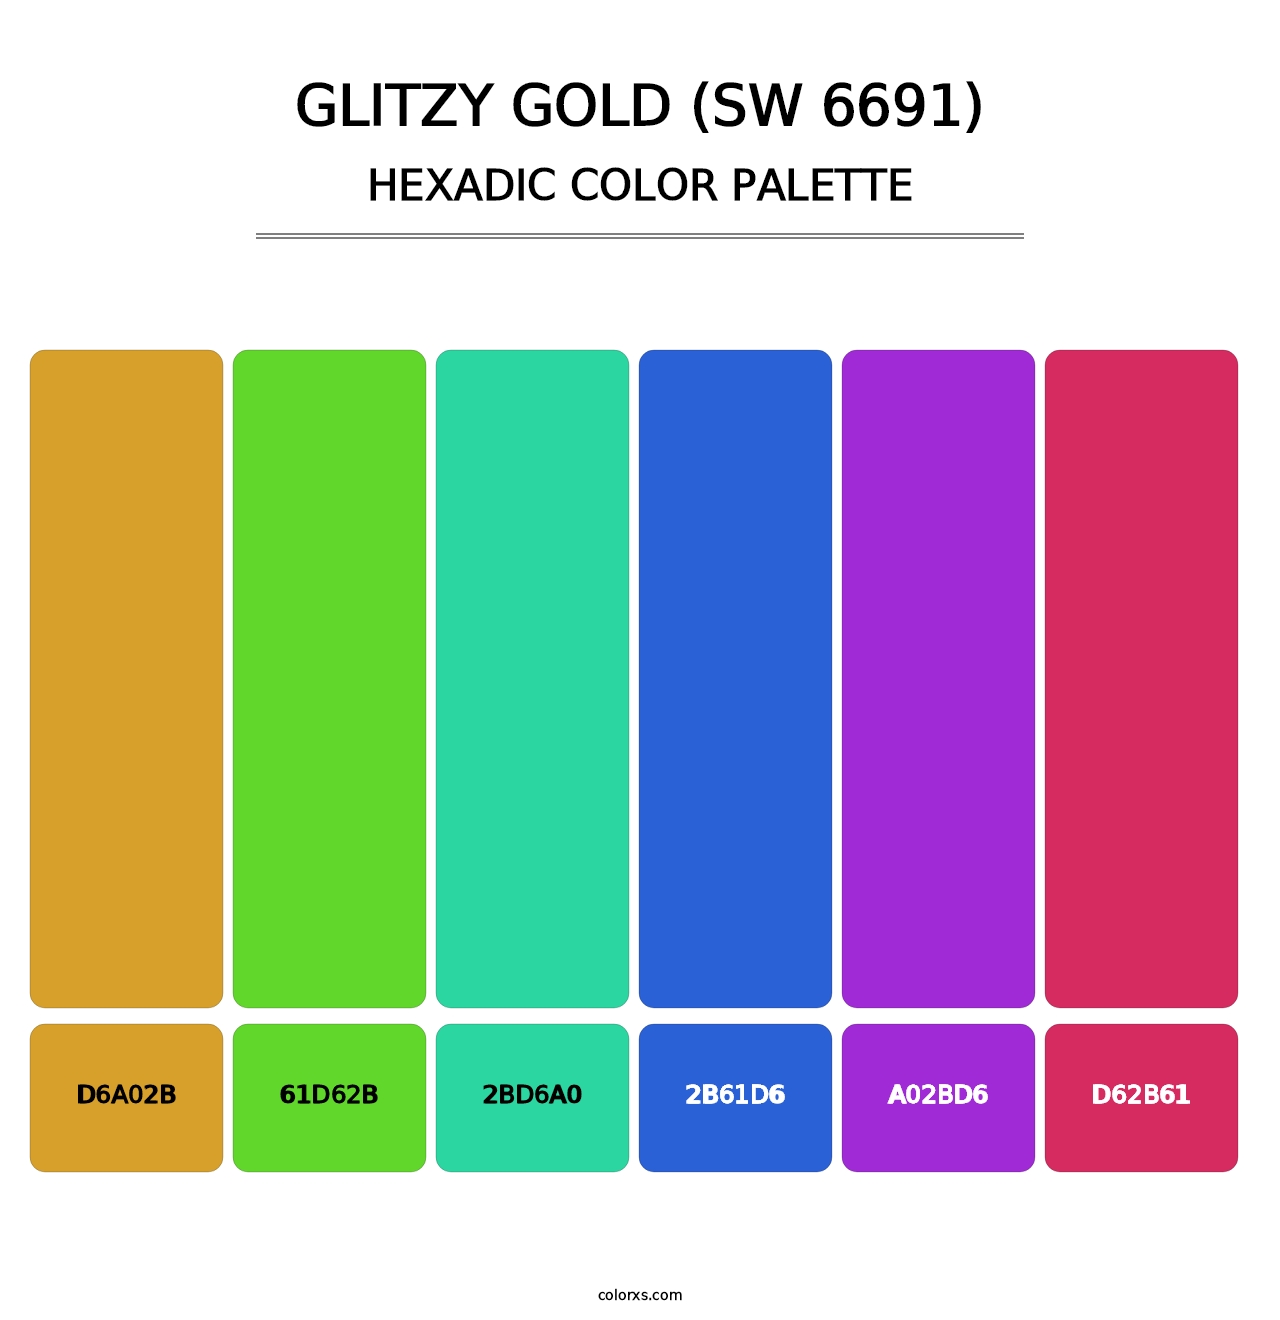 Glitzy Gold (SW 6691) - Hexadic Color Palette